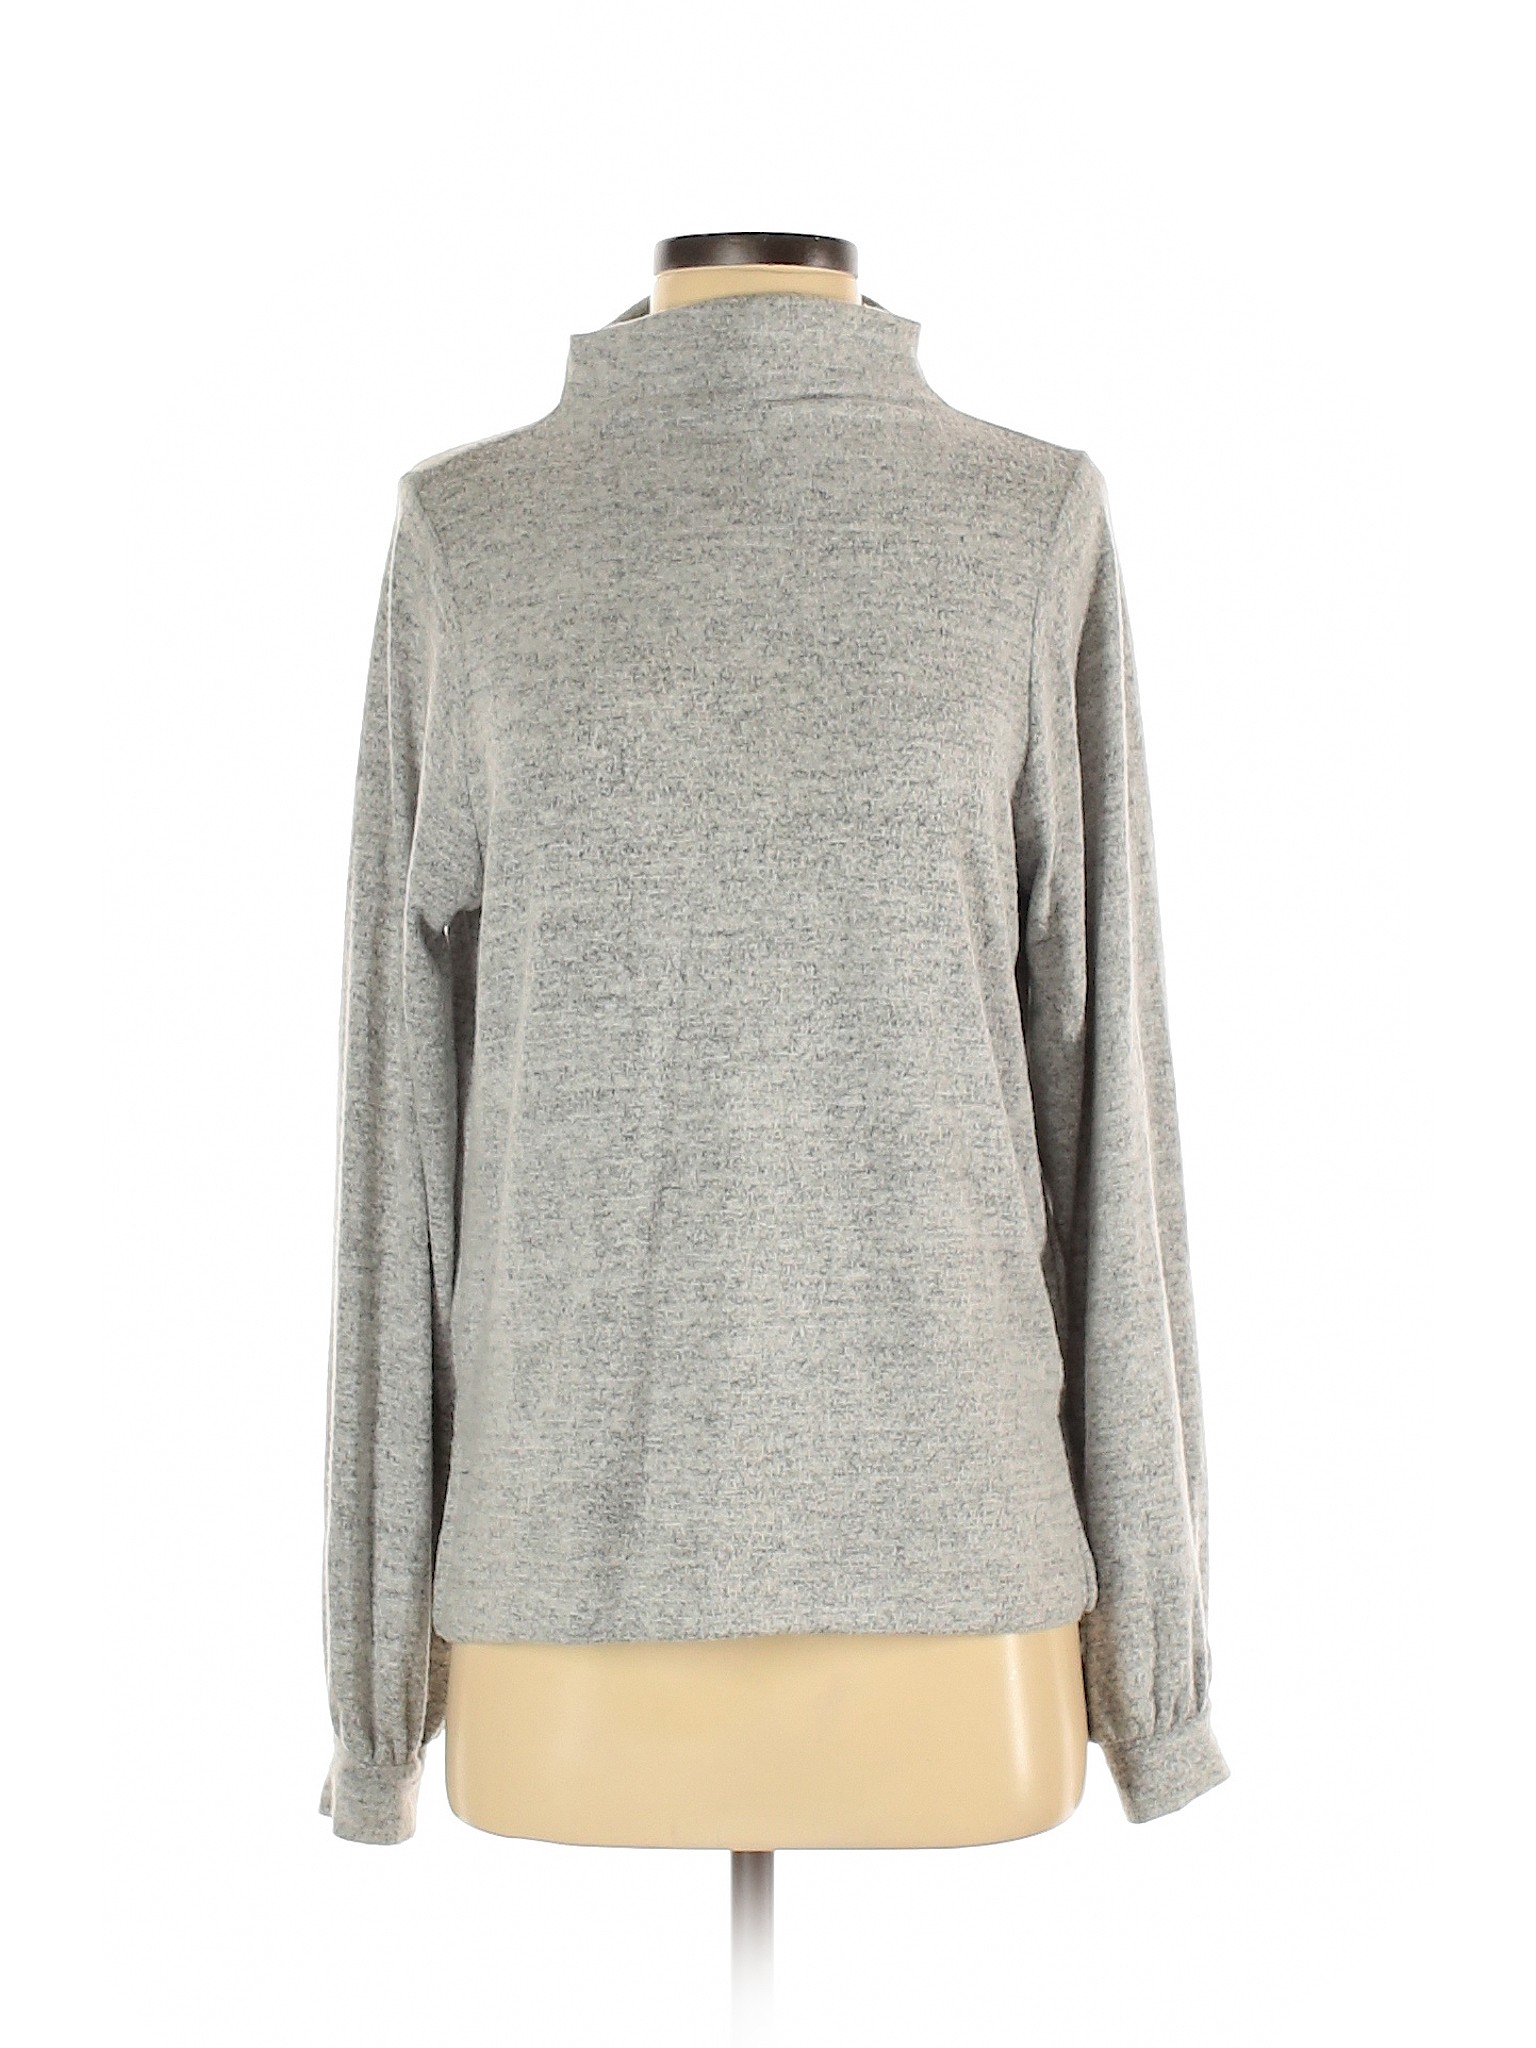 Gap Women Gray Turtleneck Sweater XS | eBay